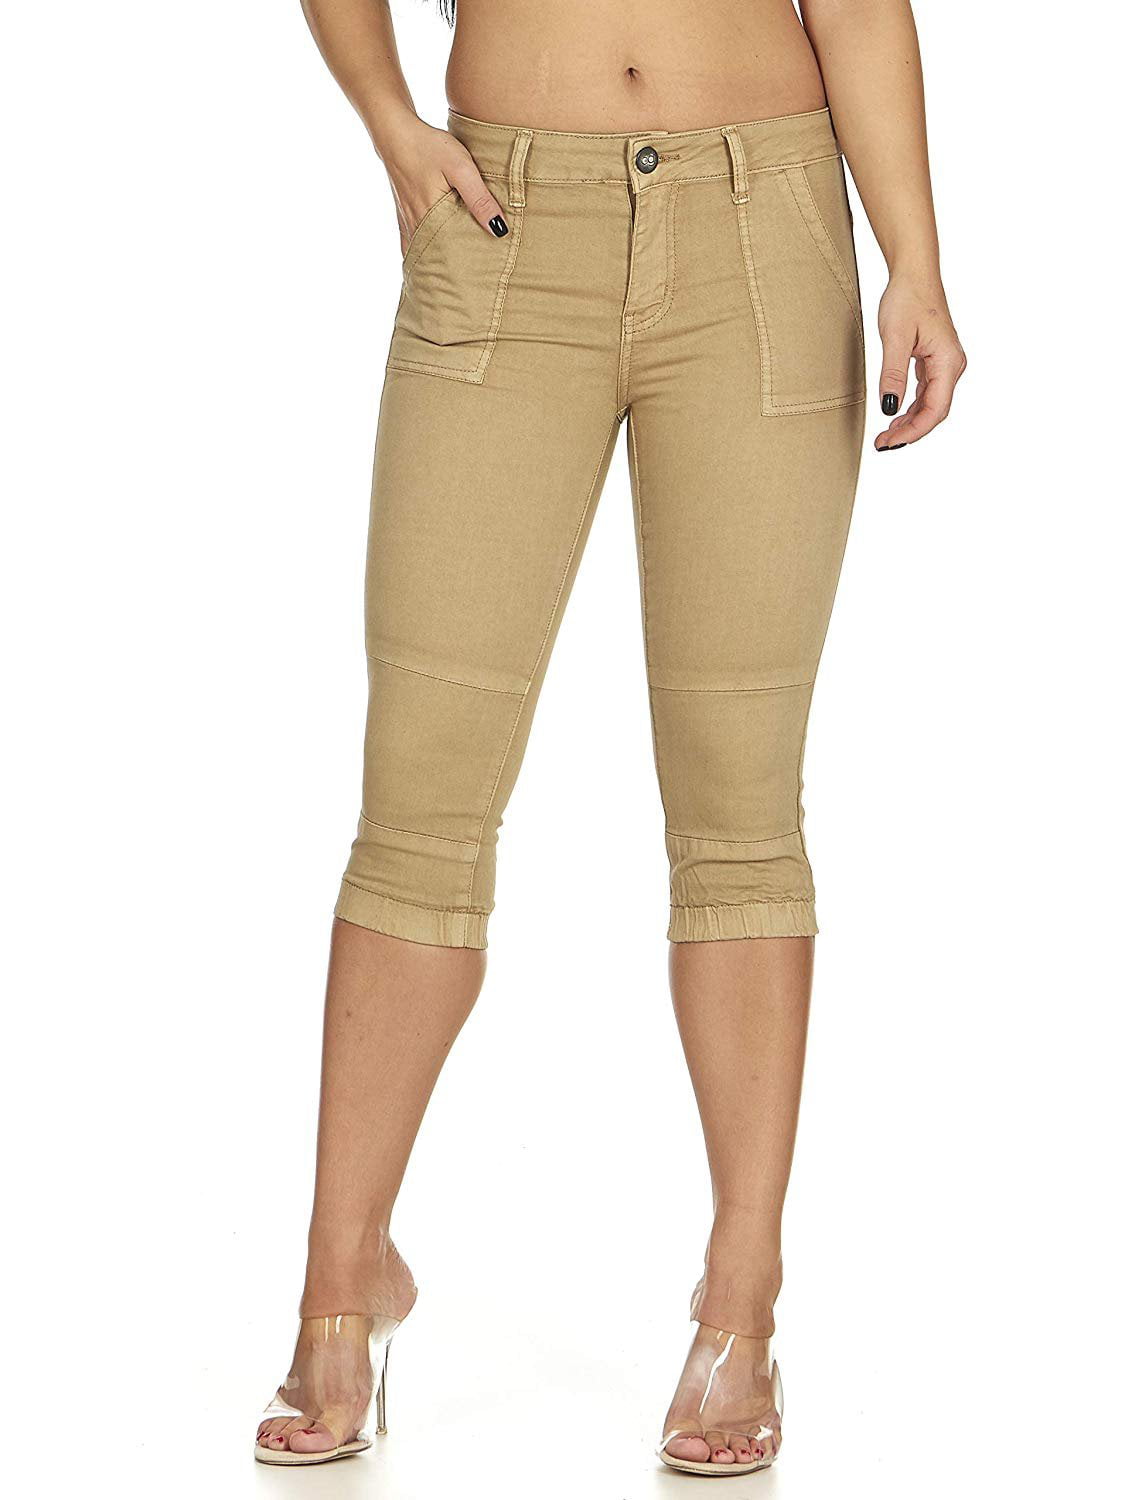 CG JEANS - Cover Girl Jeans Juniors Capri Pants for Women in Khaki Size ...